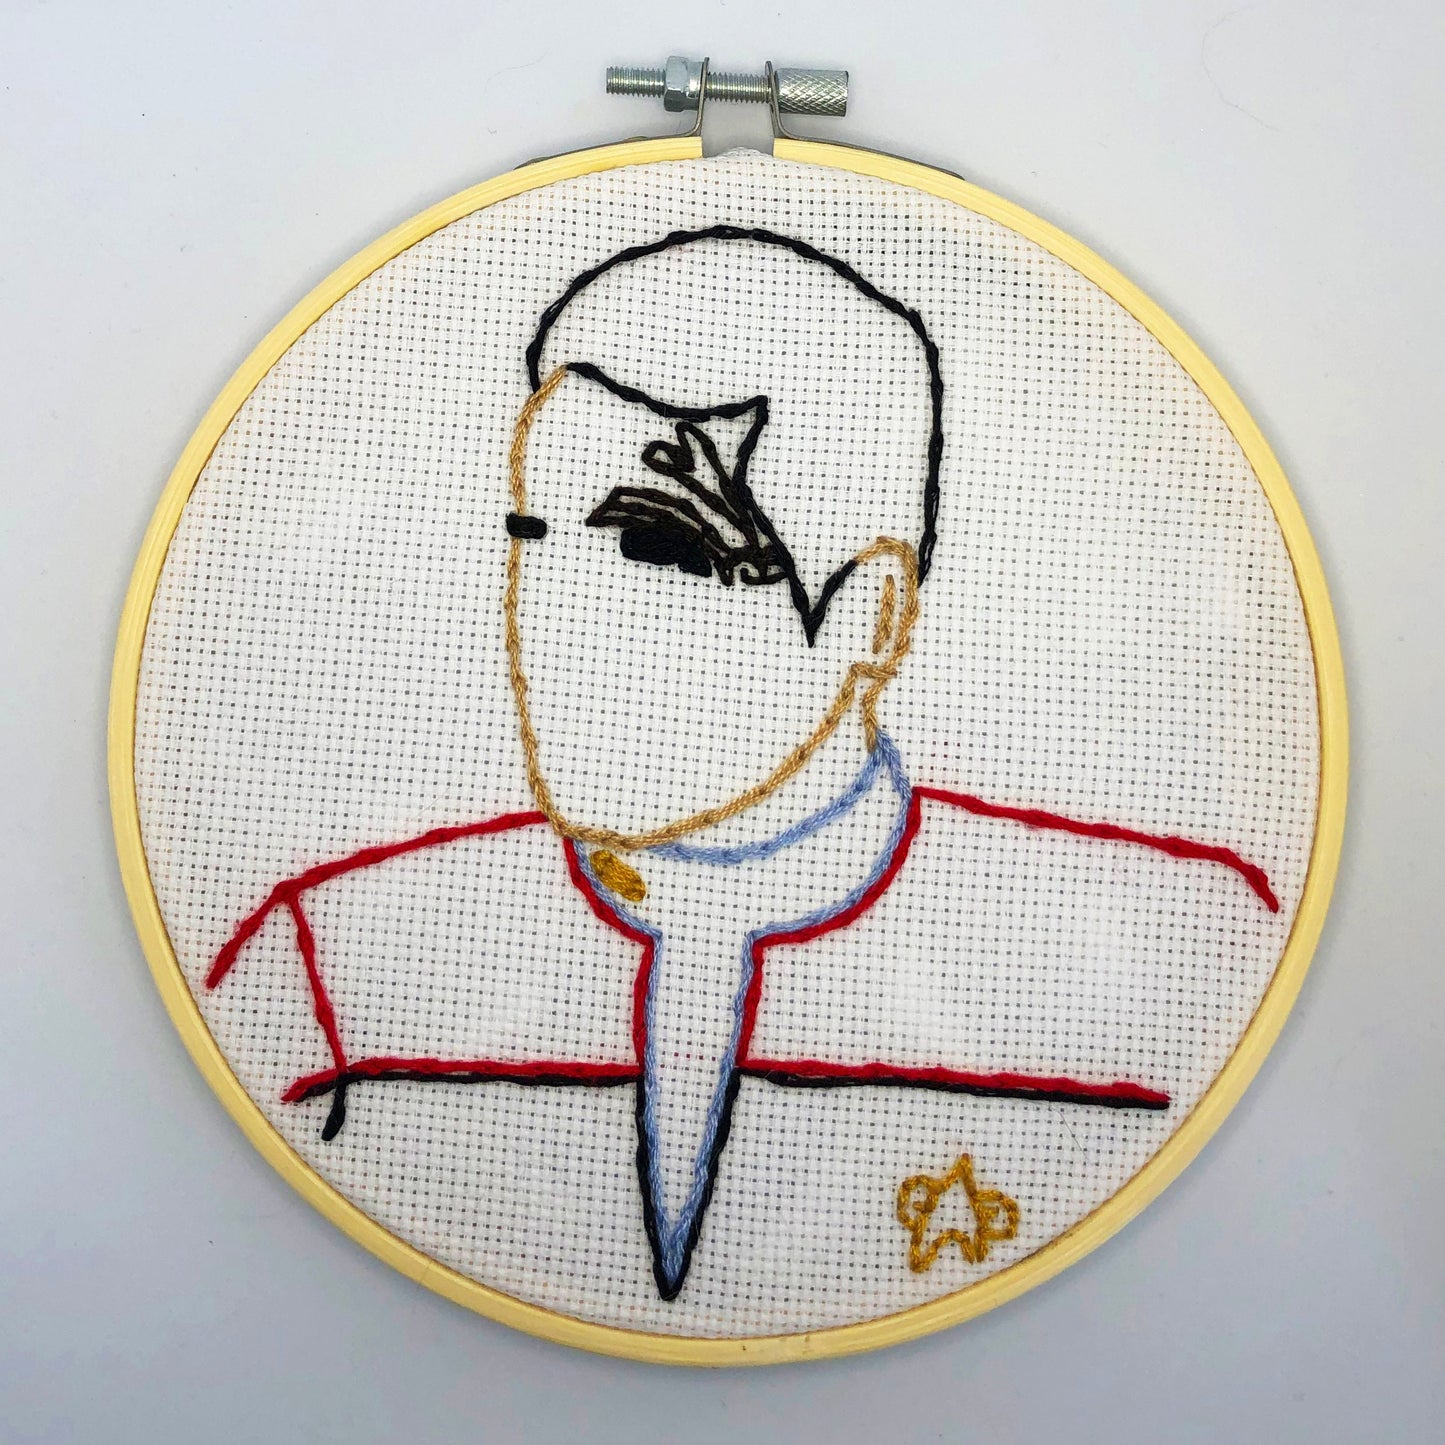 Star Trek embroidery